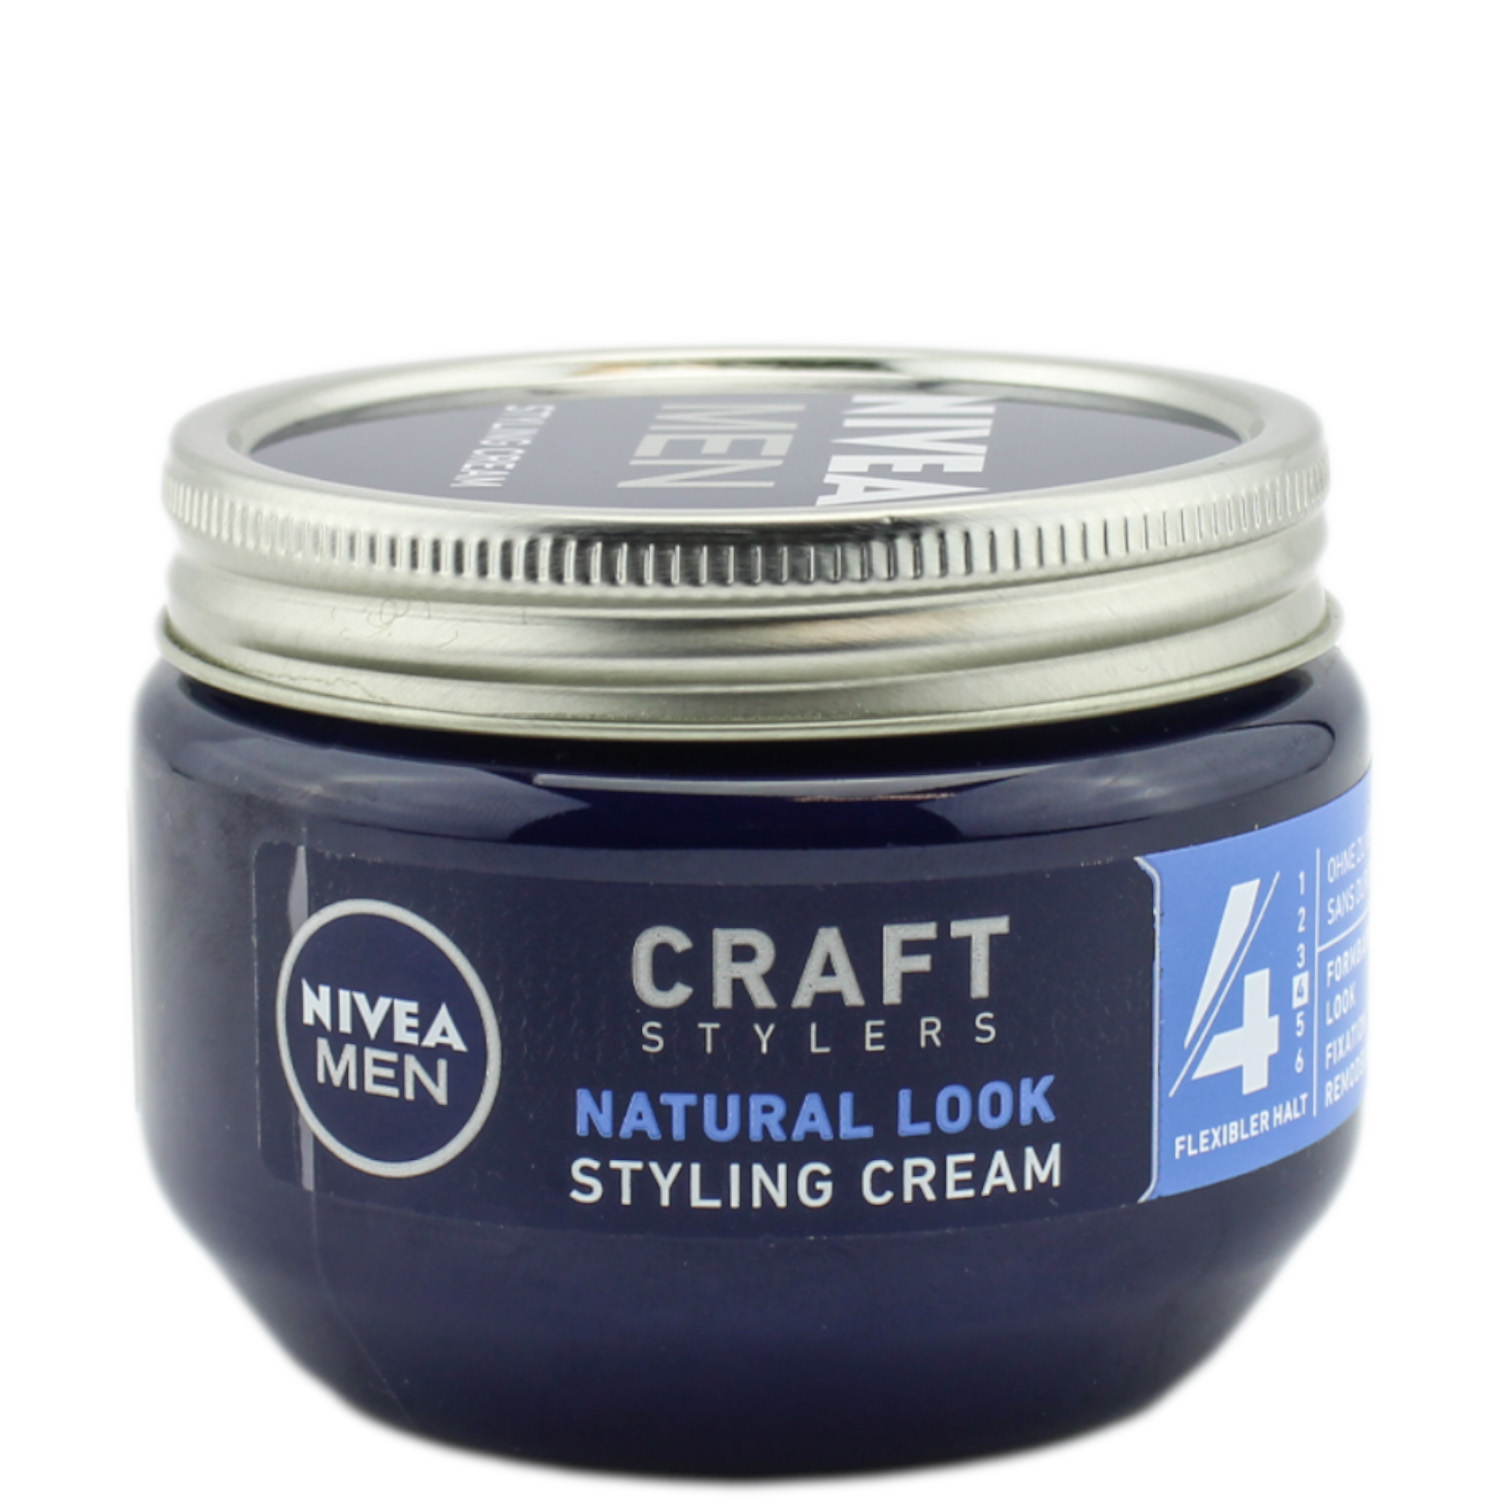 Nivea Men Craft Stylers Natural Look Styling Cream 150ml